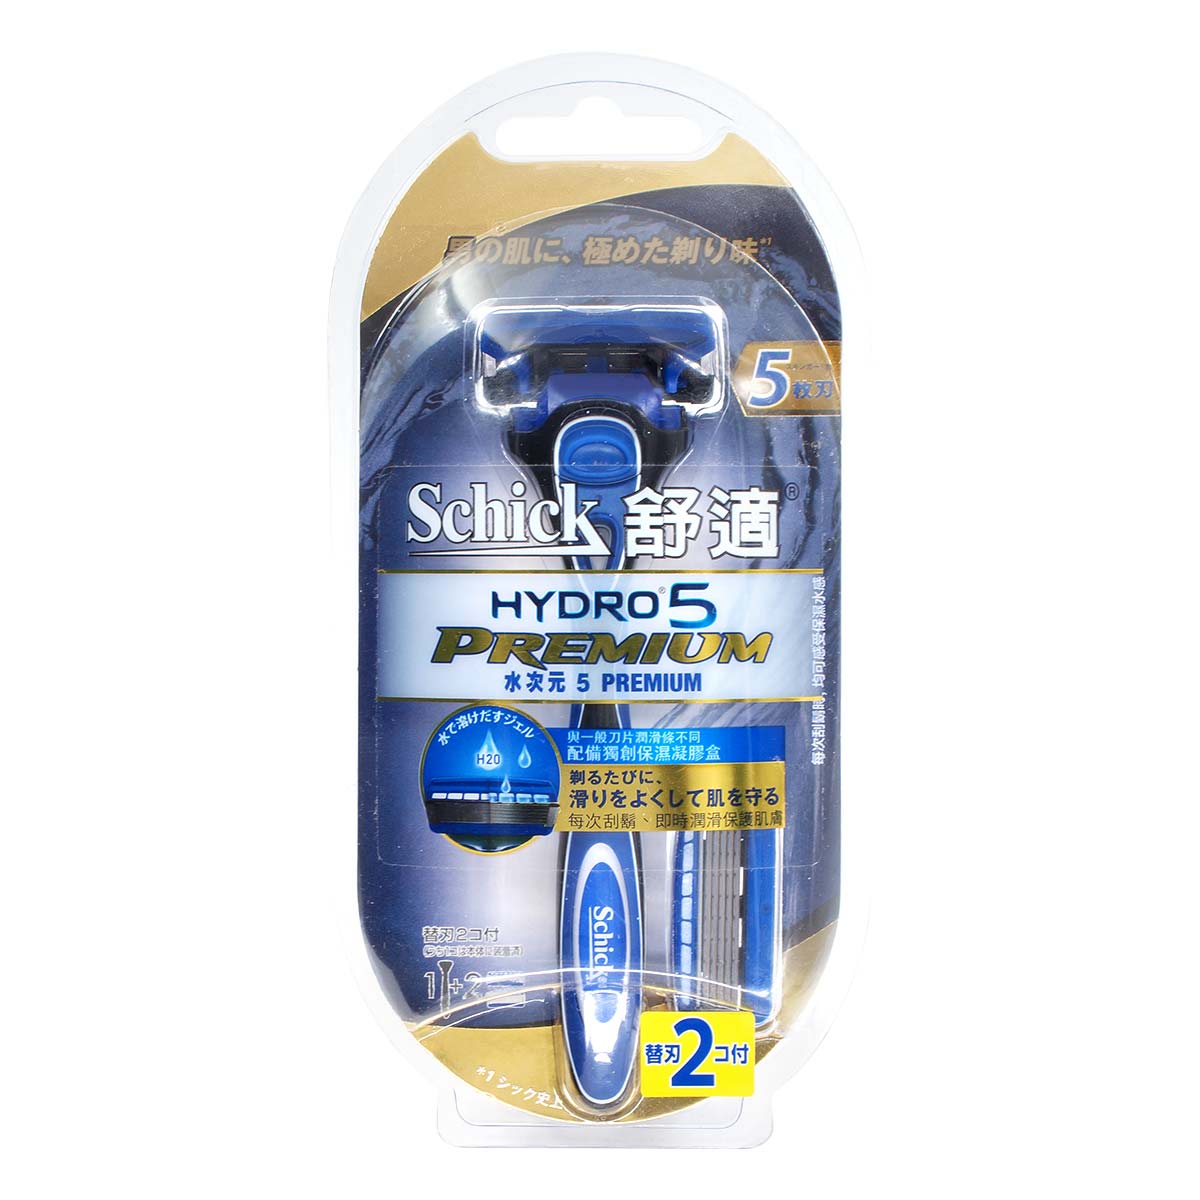 Schick 舒适 Hydro5 Premium 剃须刀-p_2